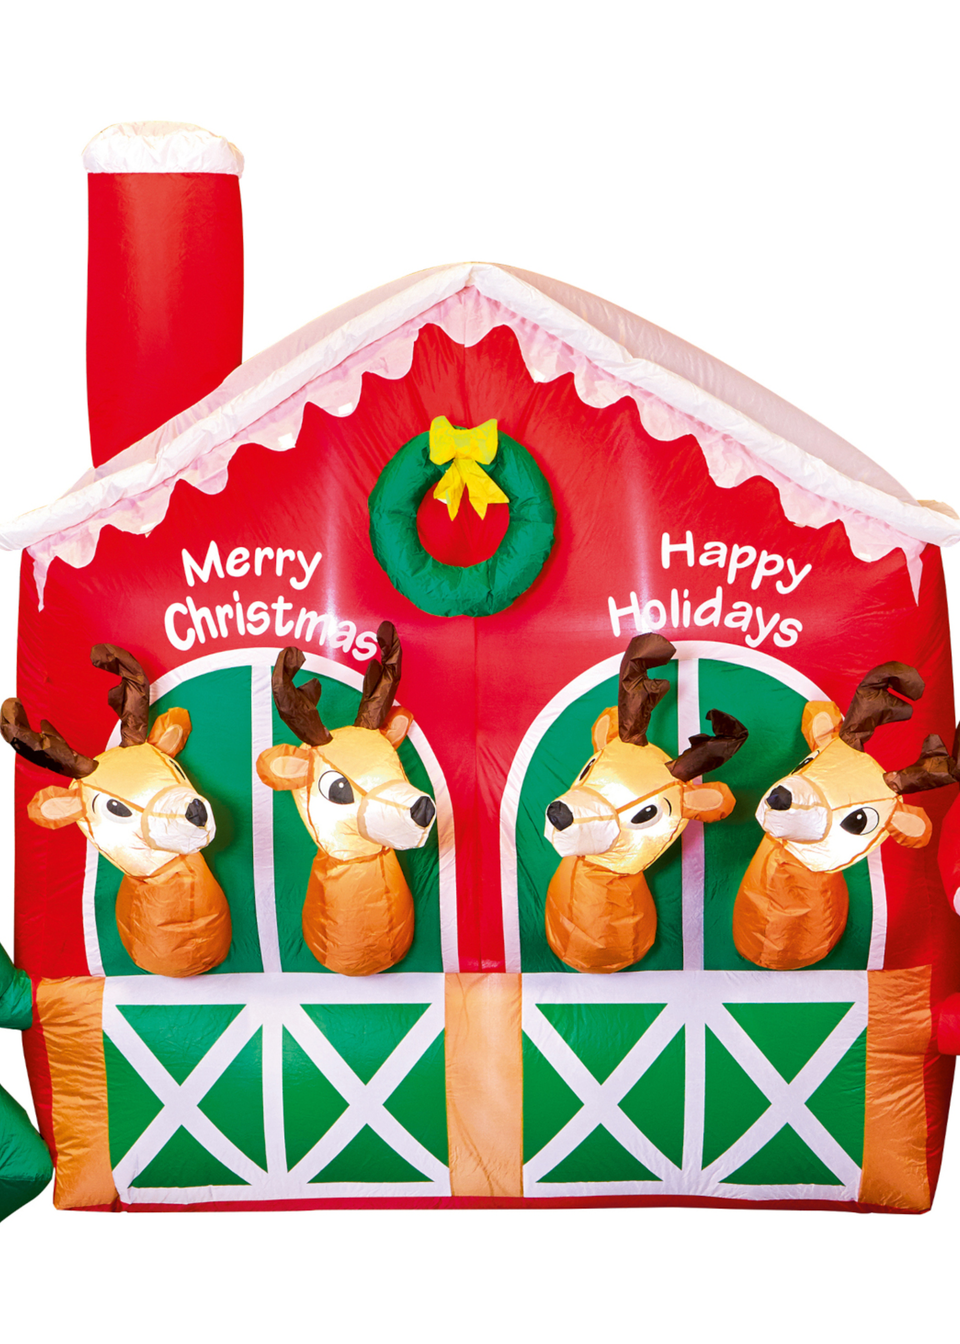 Premier Decorations 2.7m Lit Christmas Inflatable Stable